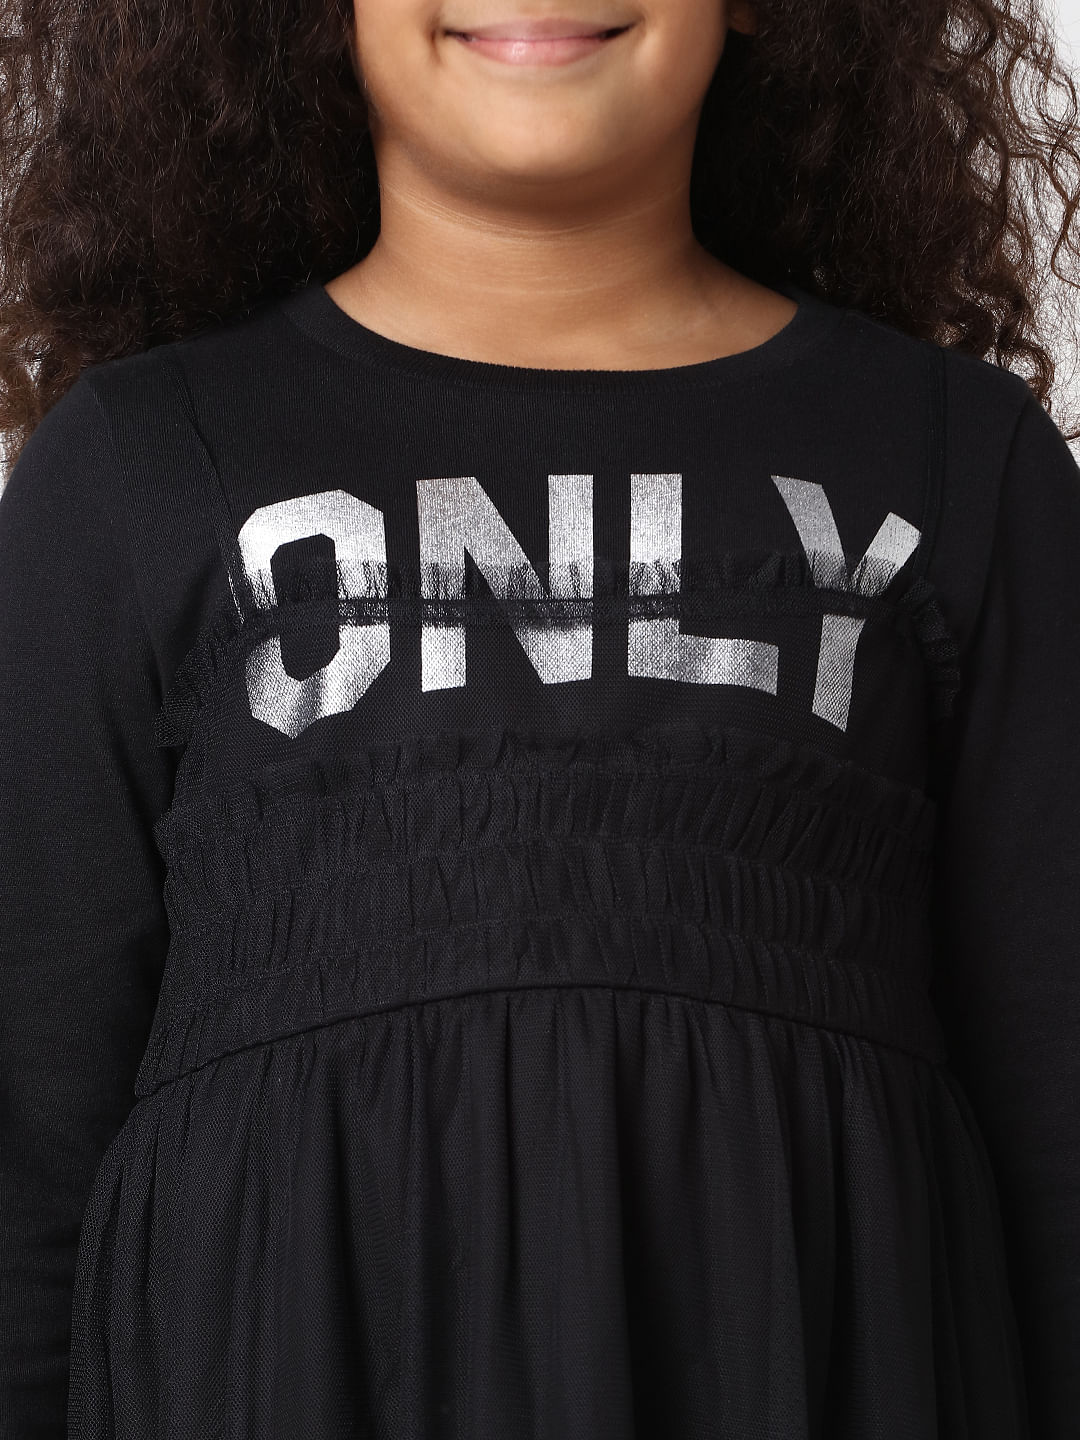 Buy Black Dresses & Frocks for Girls by AARIKA GIRLS ETHNIC Online |  Ajio.com